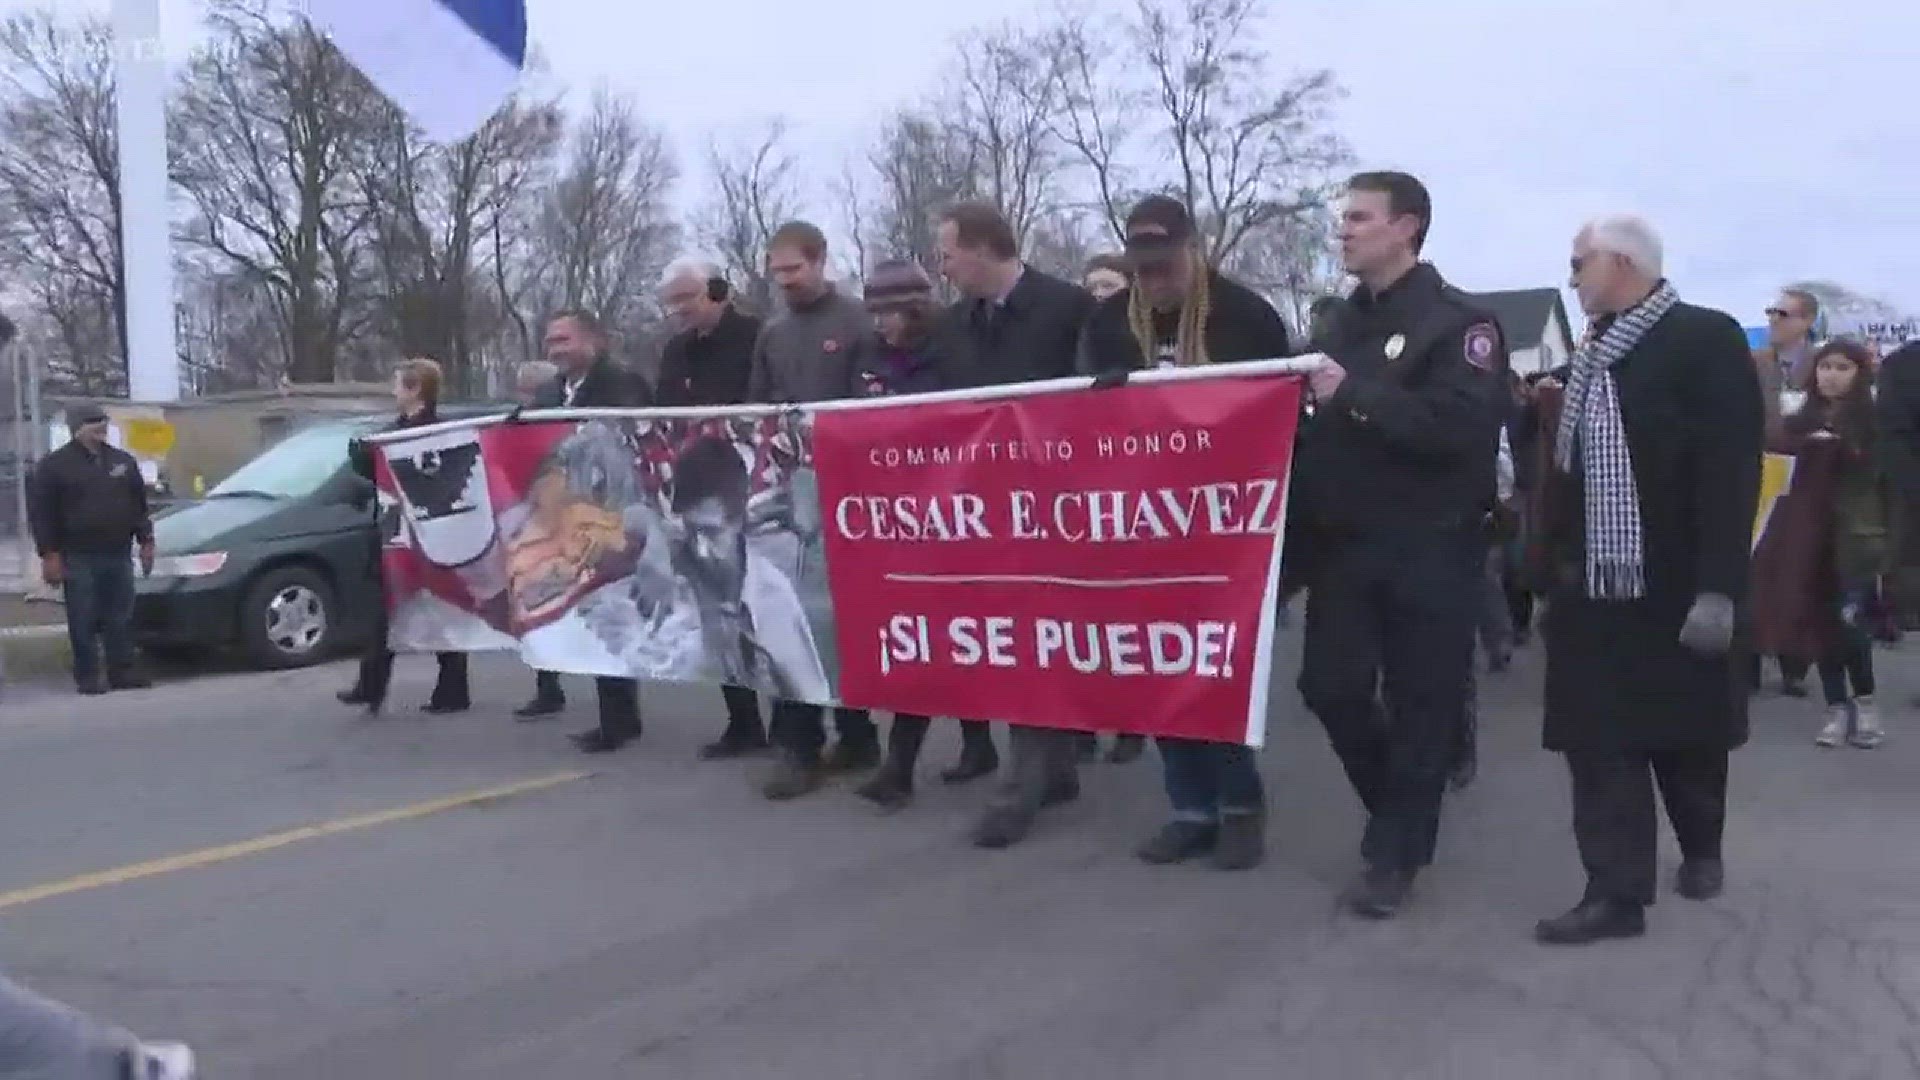 Grand Rapids celebrates the legacy of Cesar Chavez